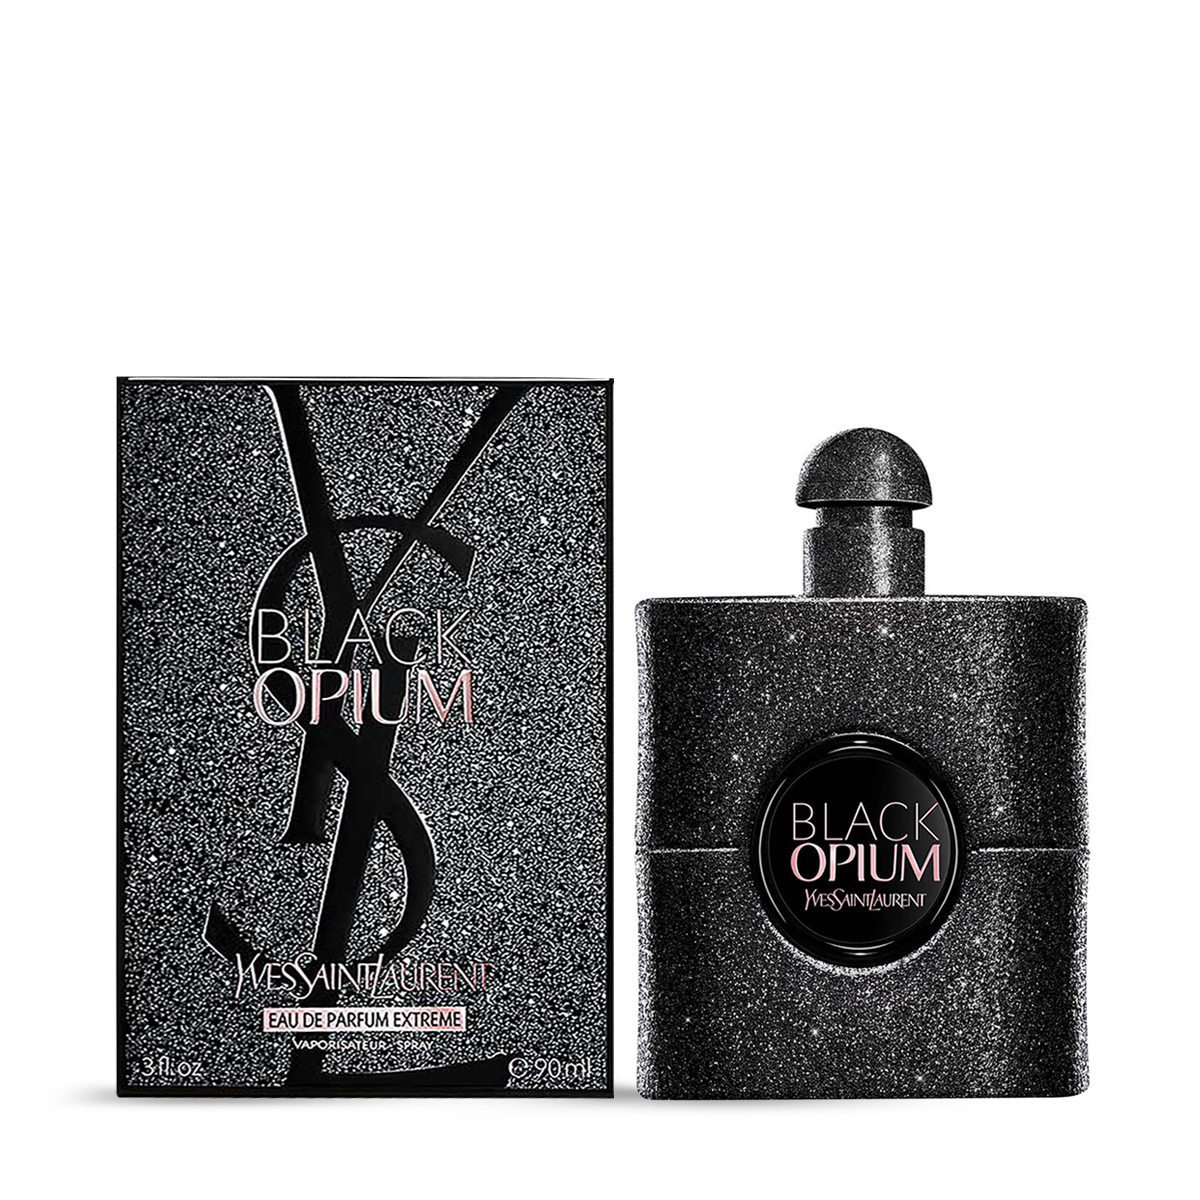 Black Opium Extreme Perfume Review 